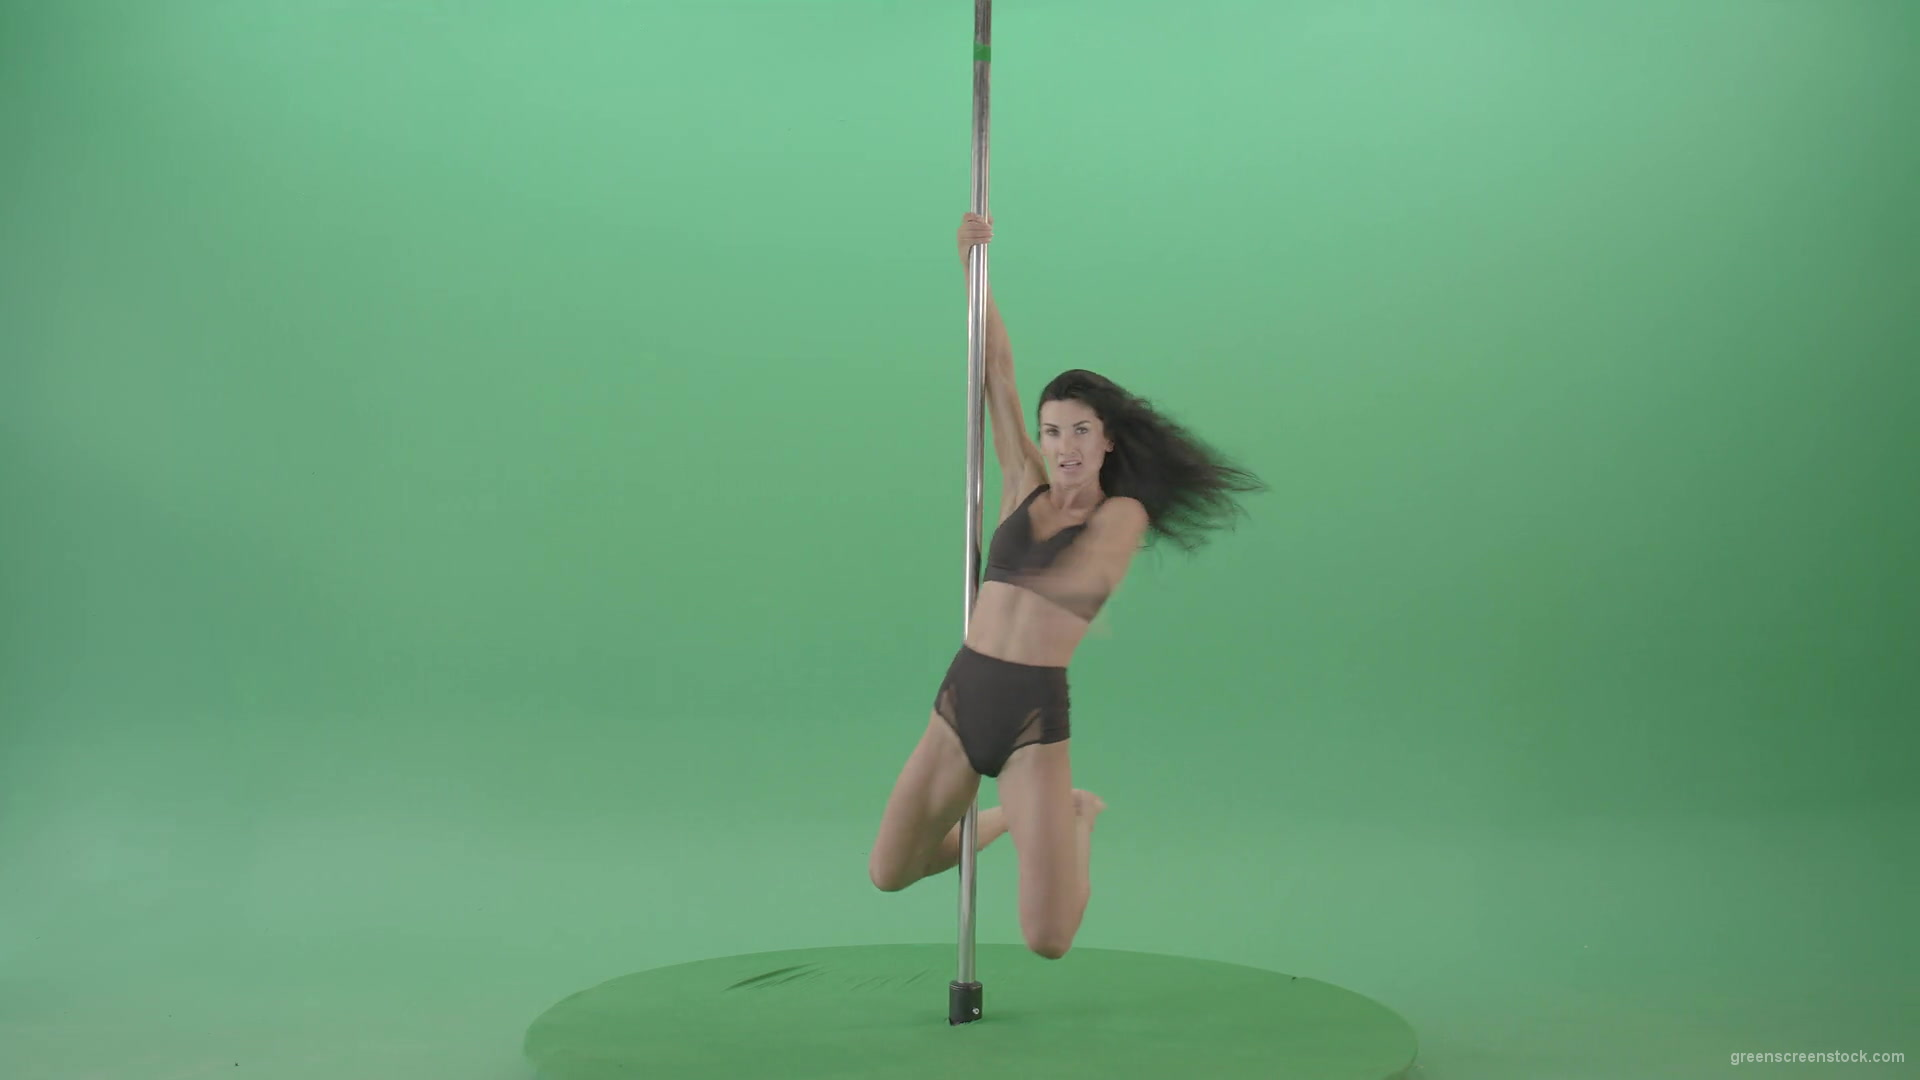 Artistic-gymnast-model-showing-strip-pole-dance-element-on-green-screen-4K-Video-Footage-1920_008 Green Screen Stock